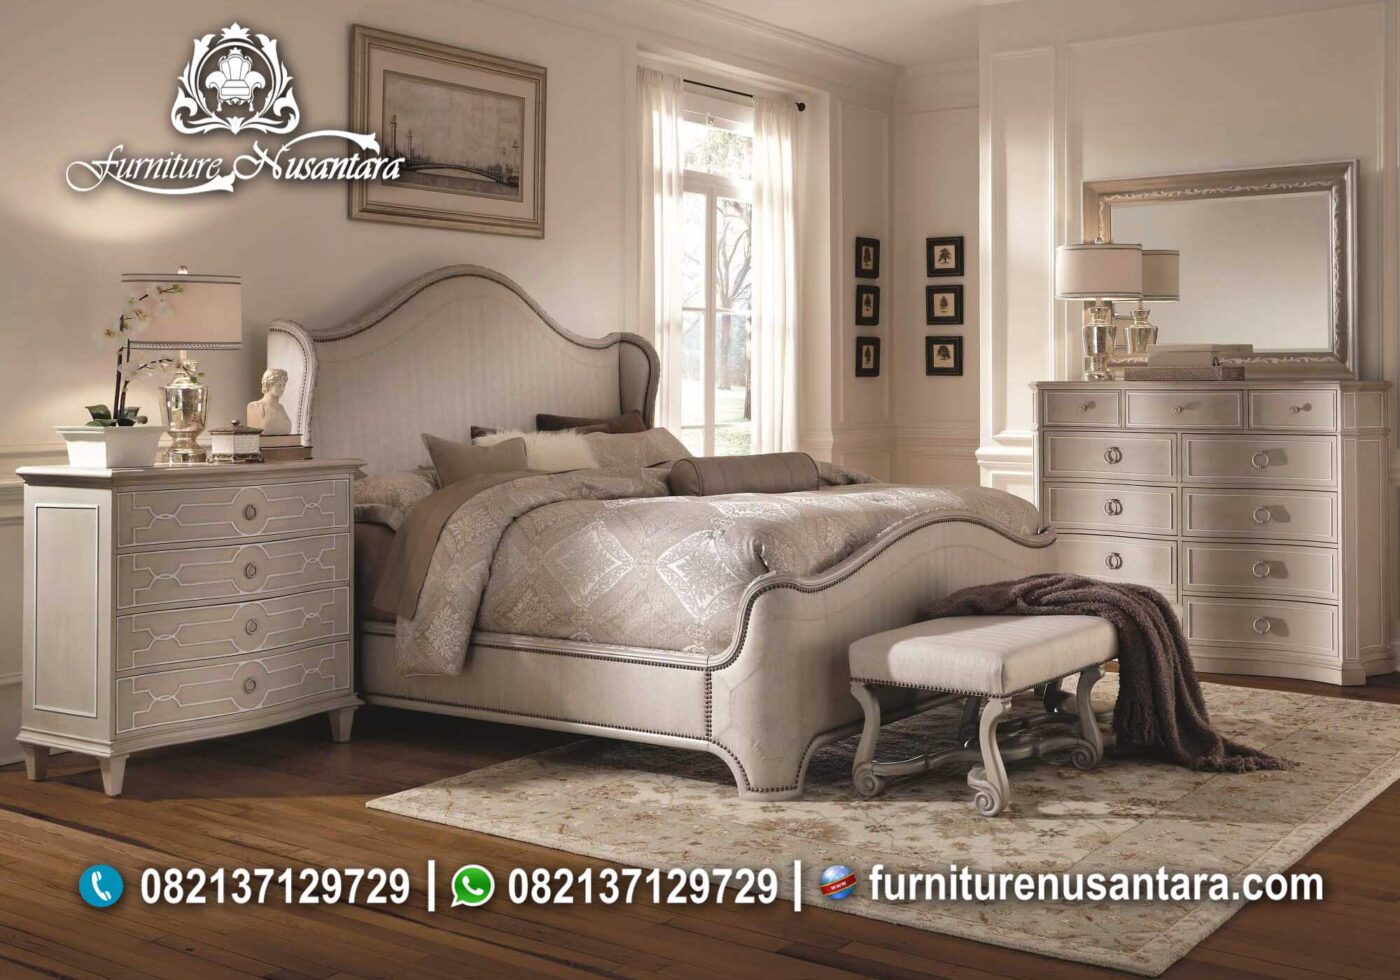 Inspirasi Kamar Tidur Minimalis KS-25, Furniture Nusantara